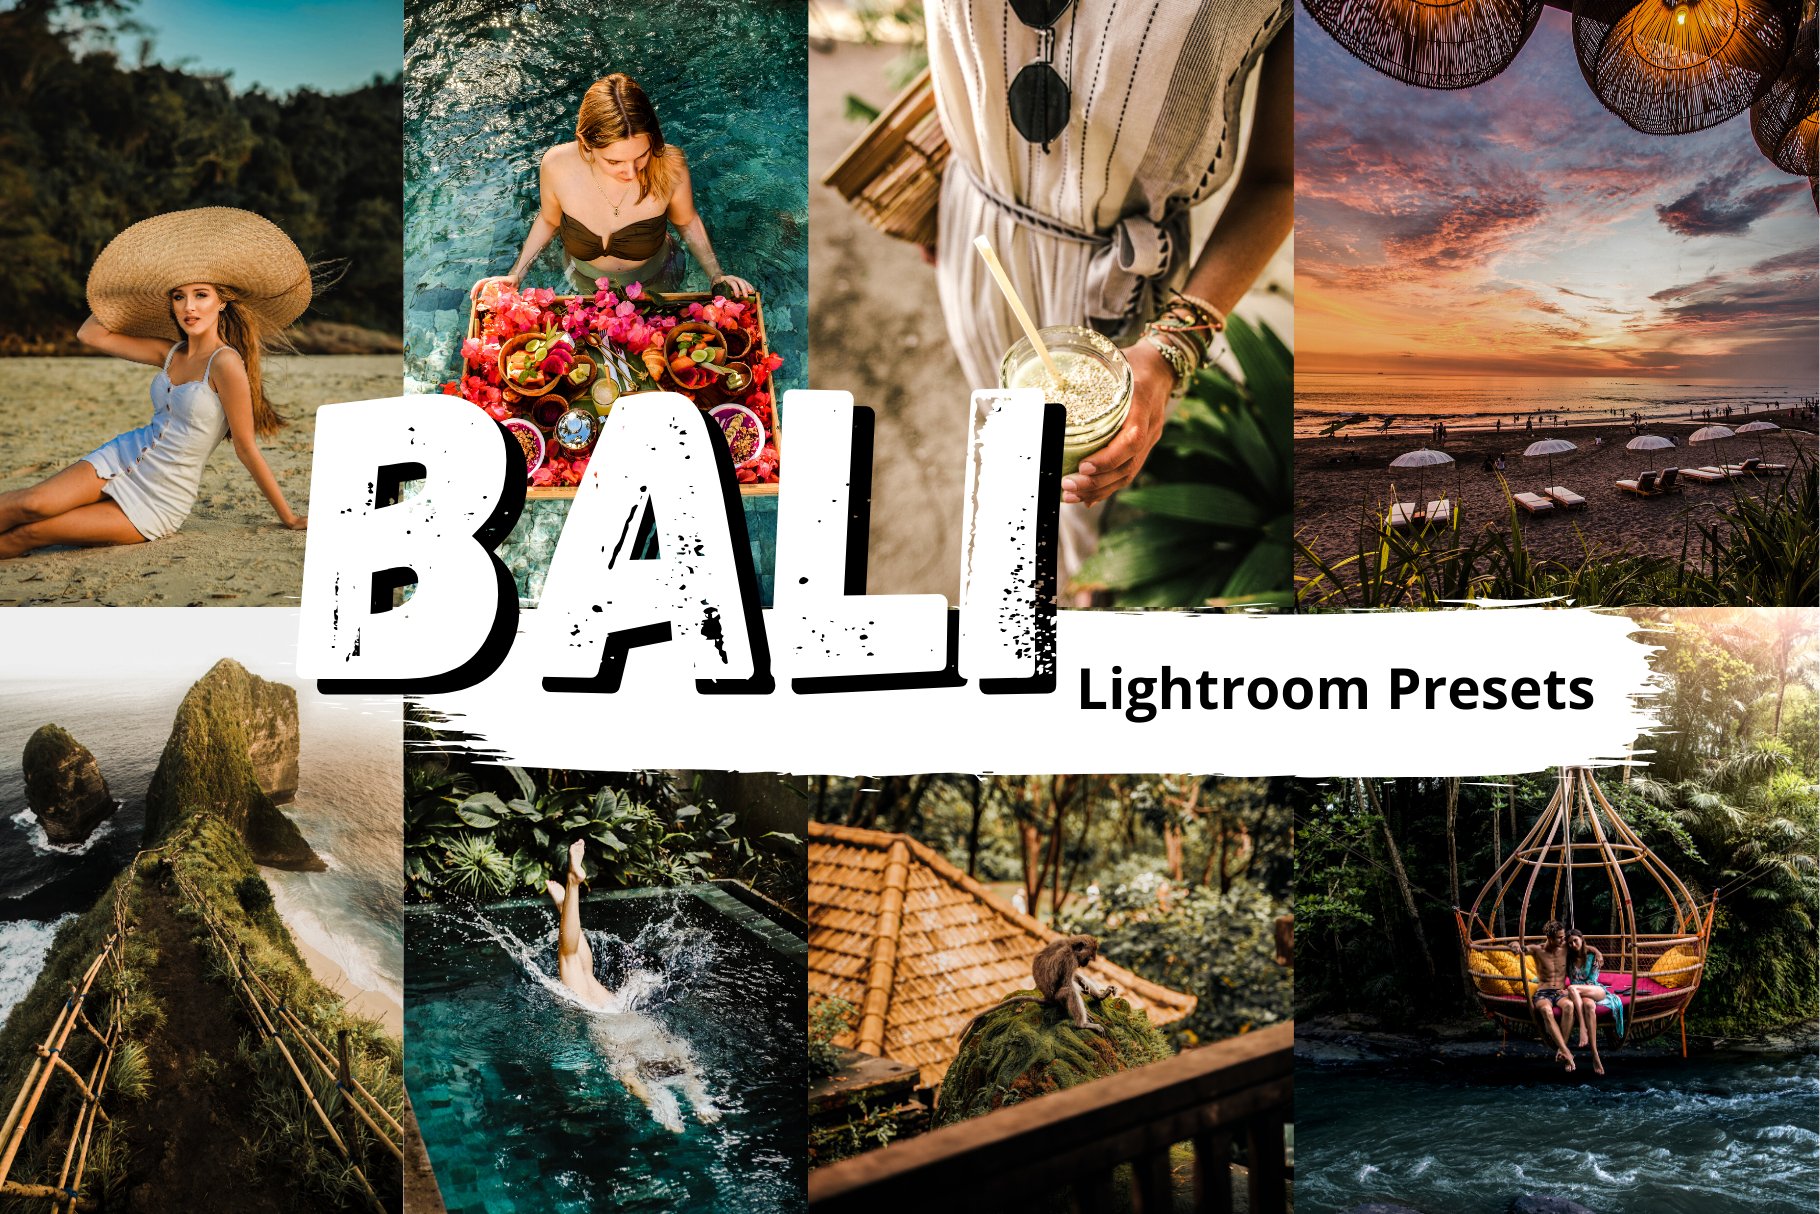 Bali Lightroom Presets XMP/DNGcover image.